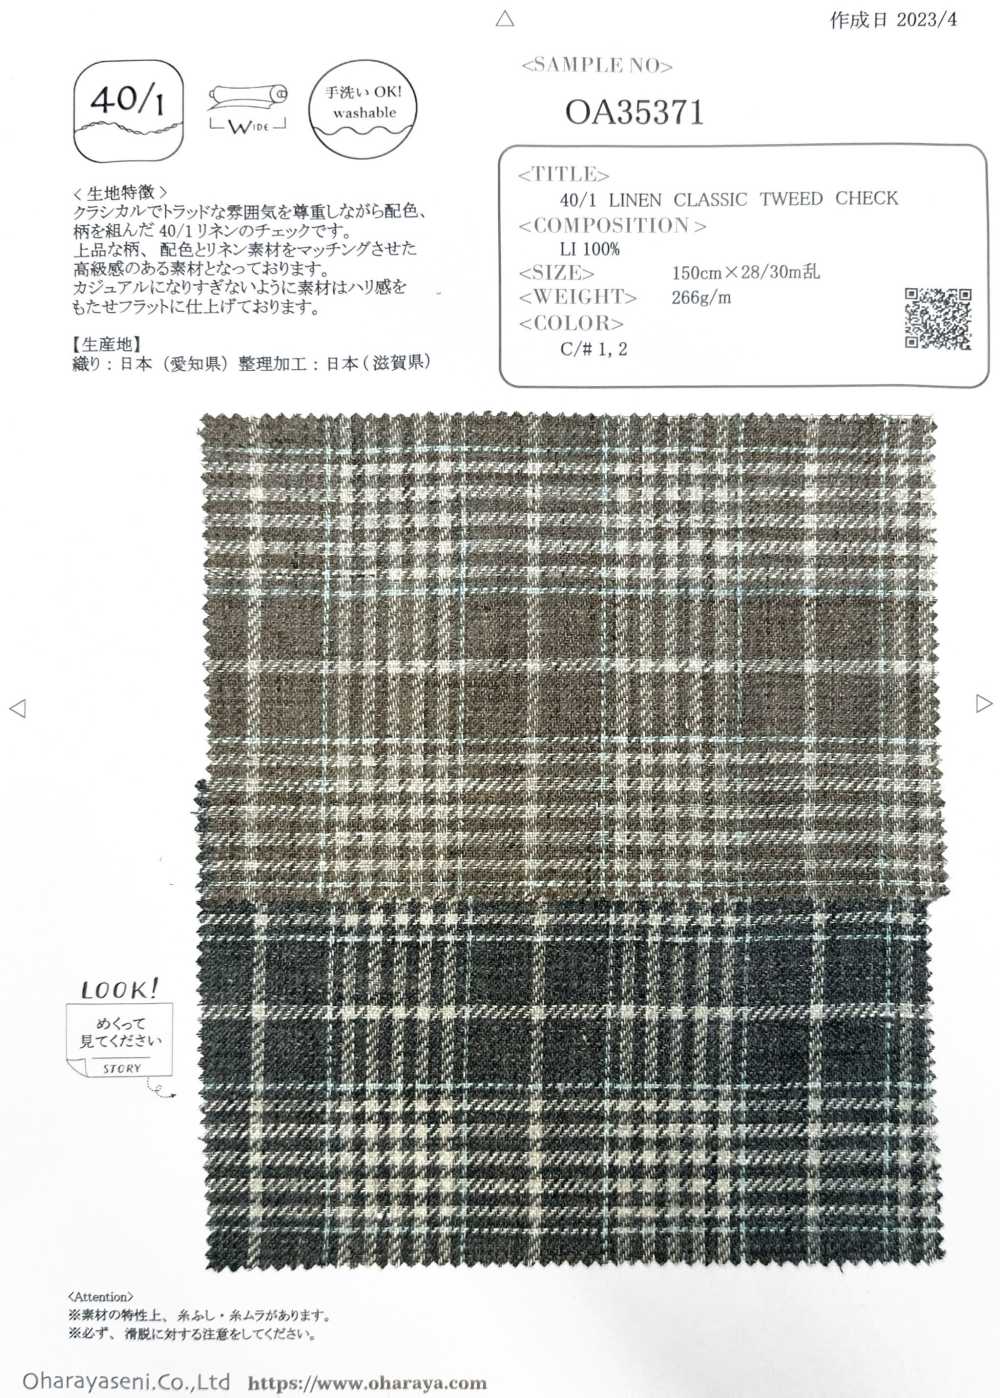 OA35371 40/1 KLASSISCHES TWEED-KARIER AUS LEINEN[Textilgewebe] Oharayaseni